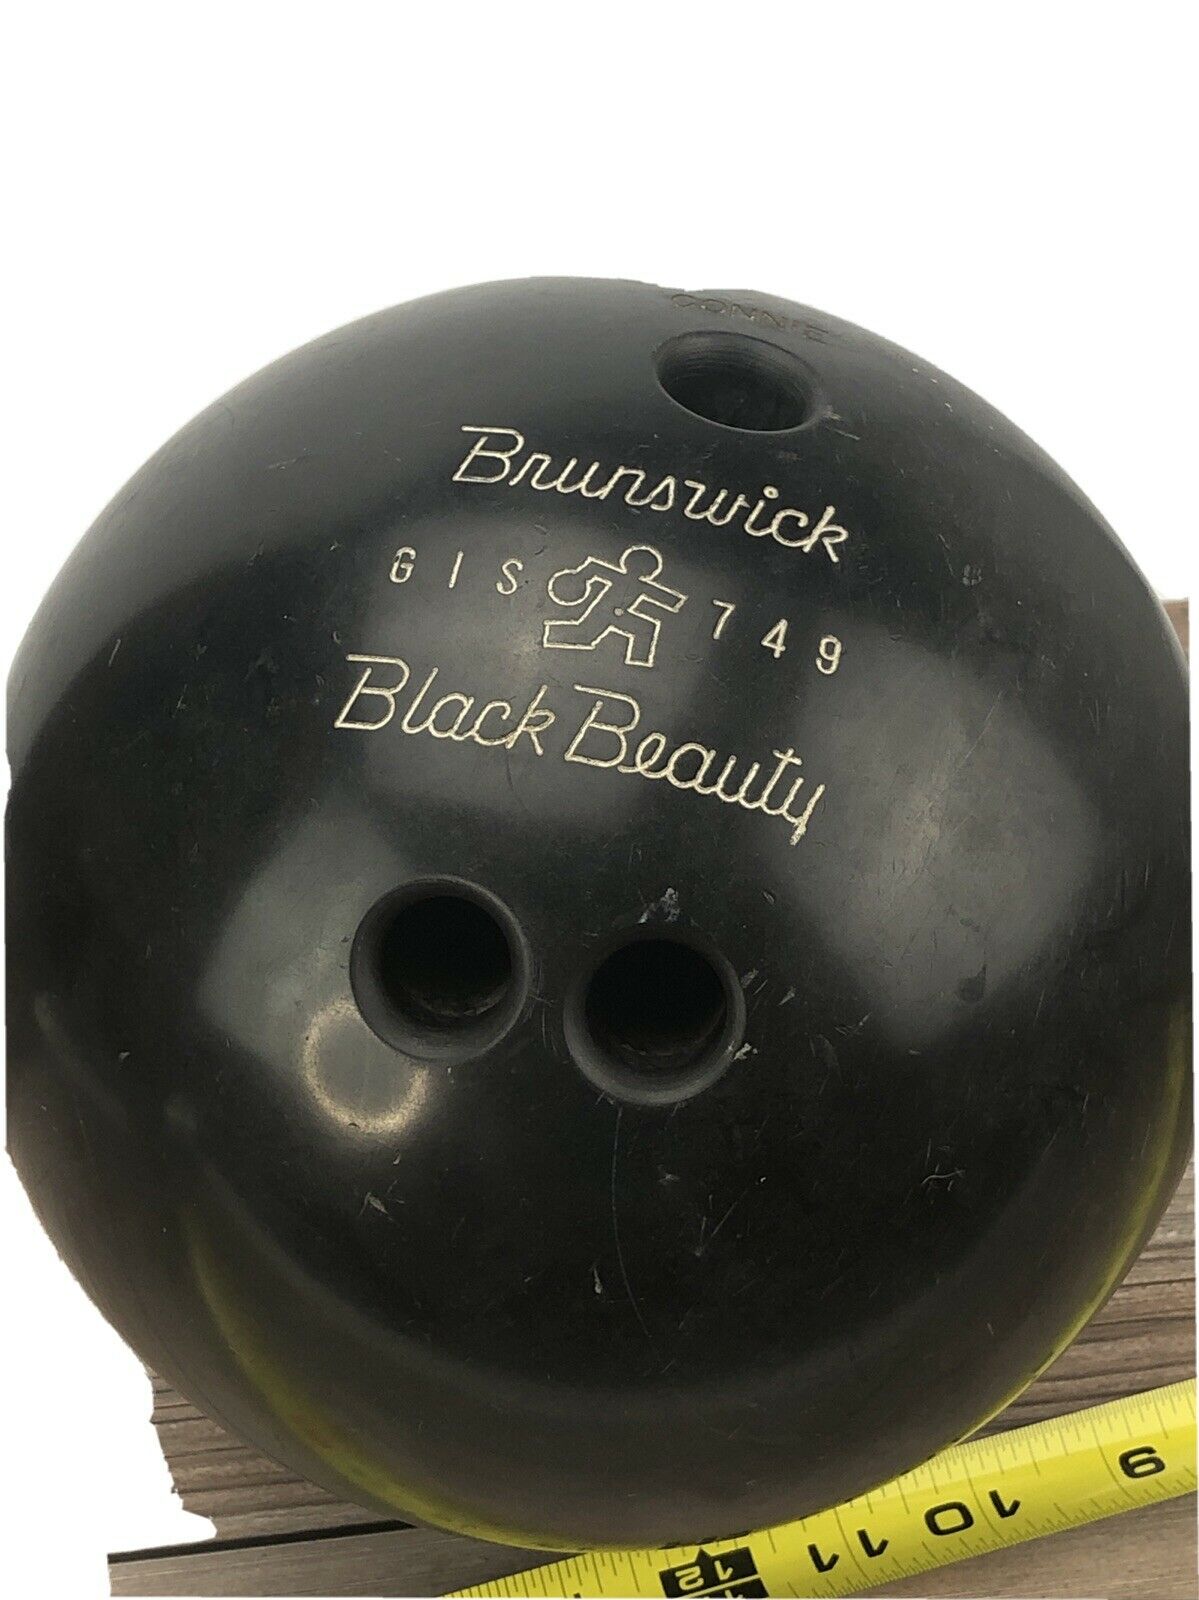 Vintage Bowling Ball Vintage Brunswick Black Beauty Bowling Ball 15lbs